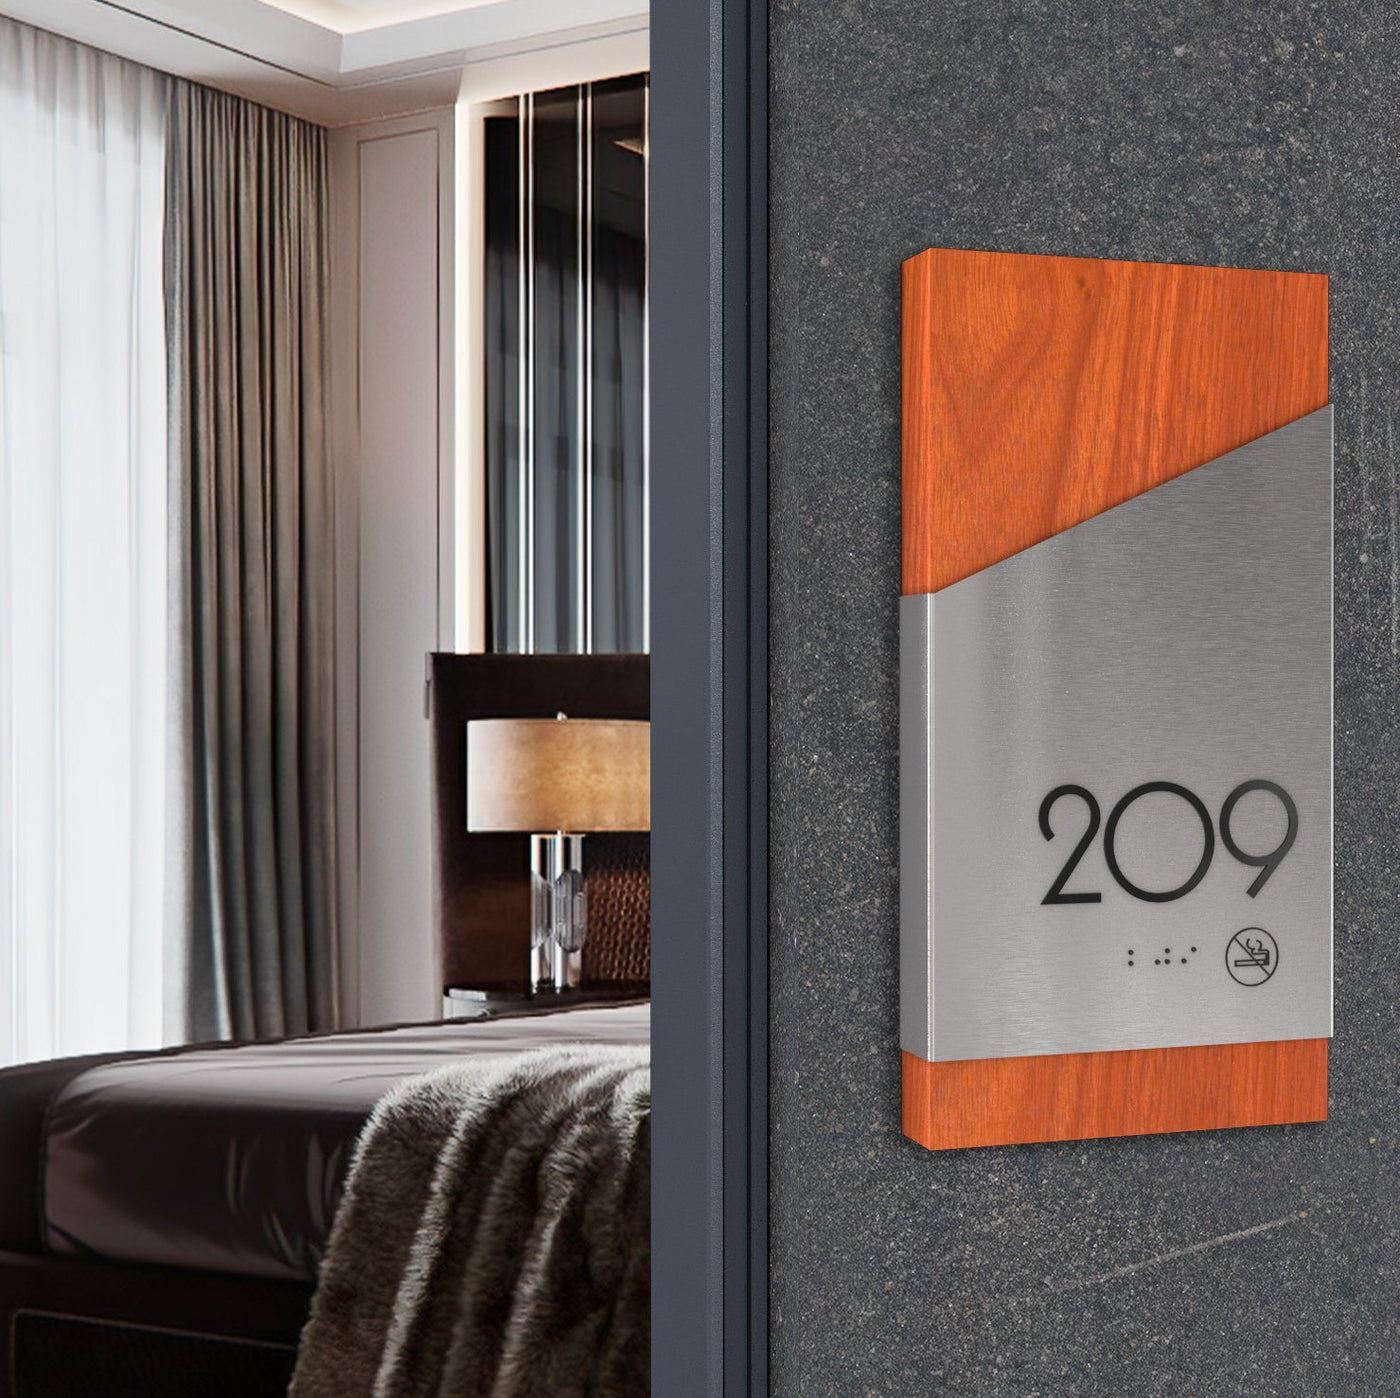 Hotel Room Number Sign — Stainless steel & Wood Door Plate